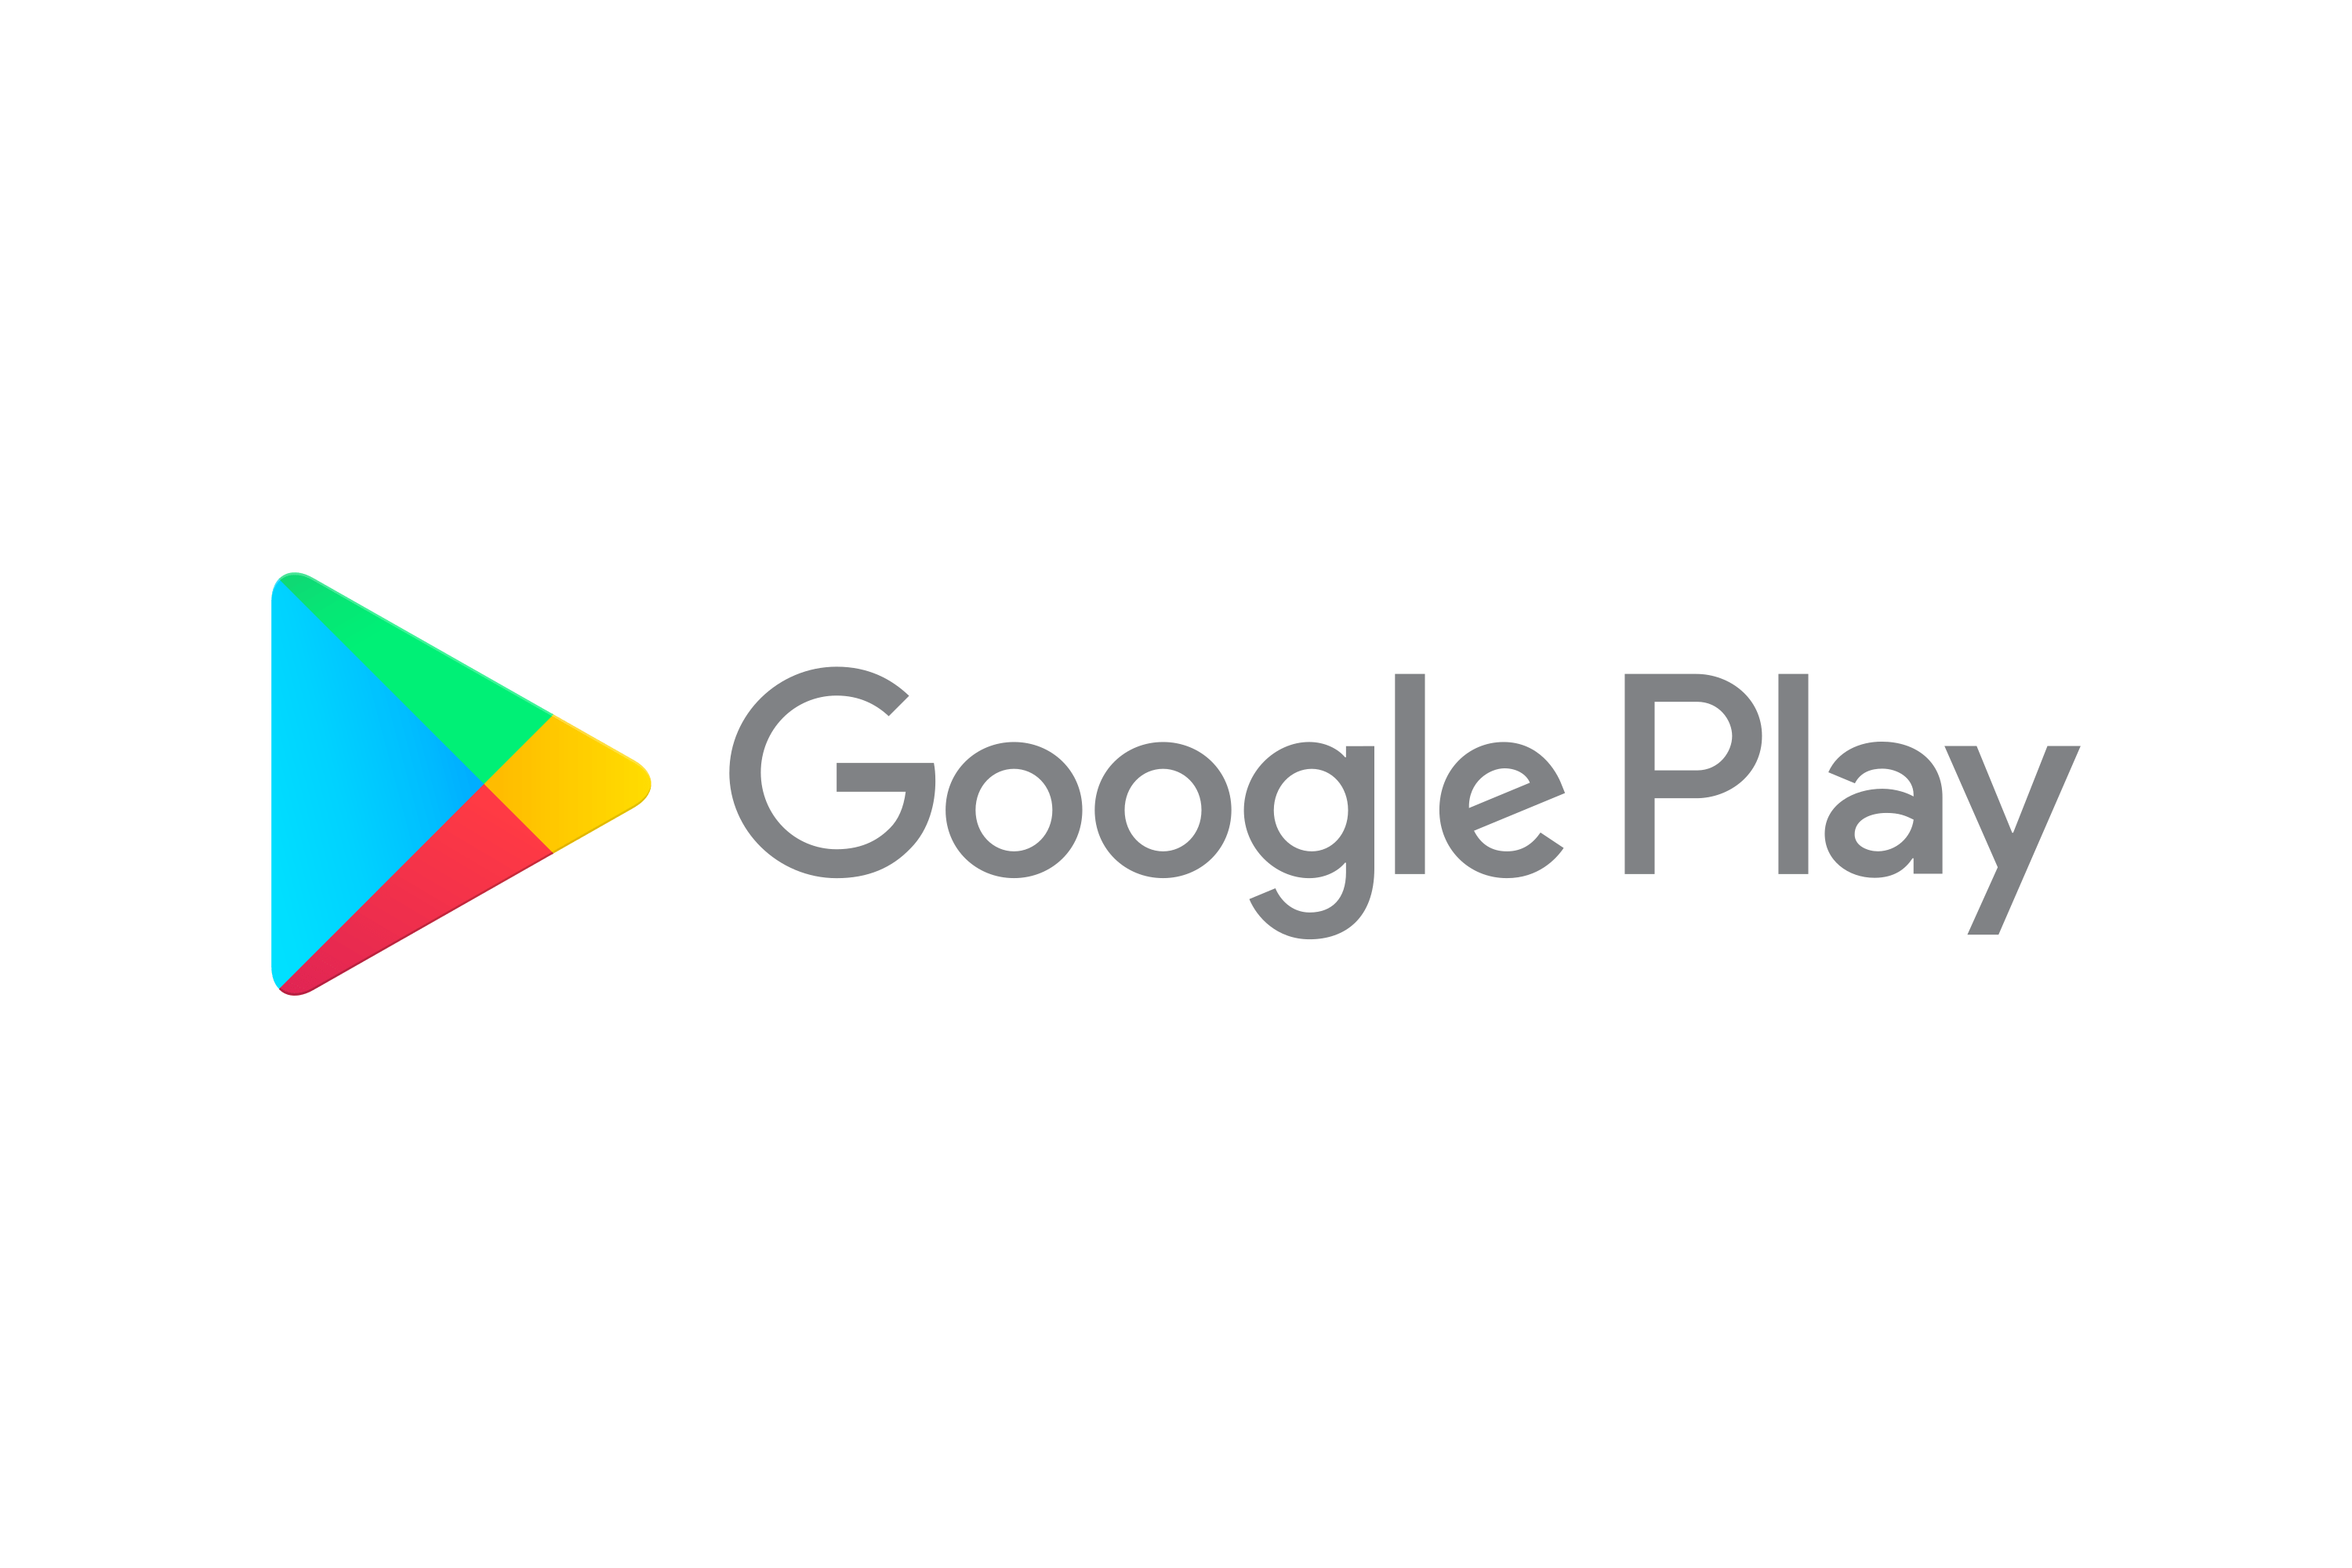 Google Play Logo Png - KibrisPDR